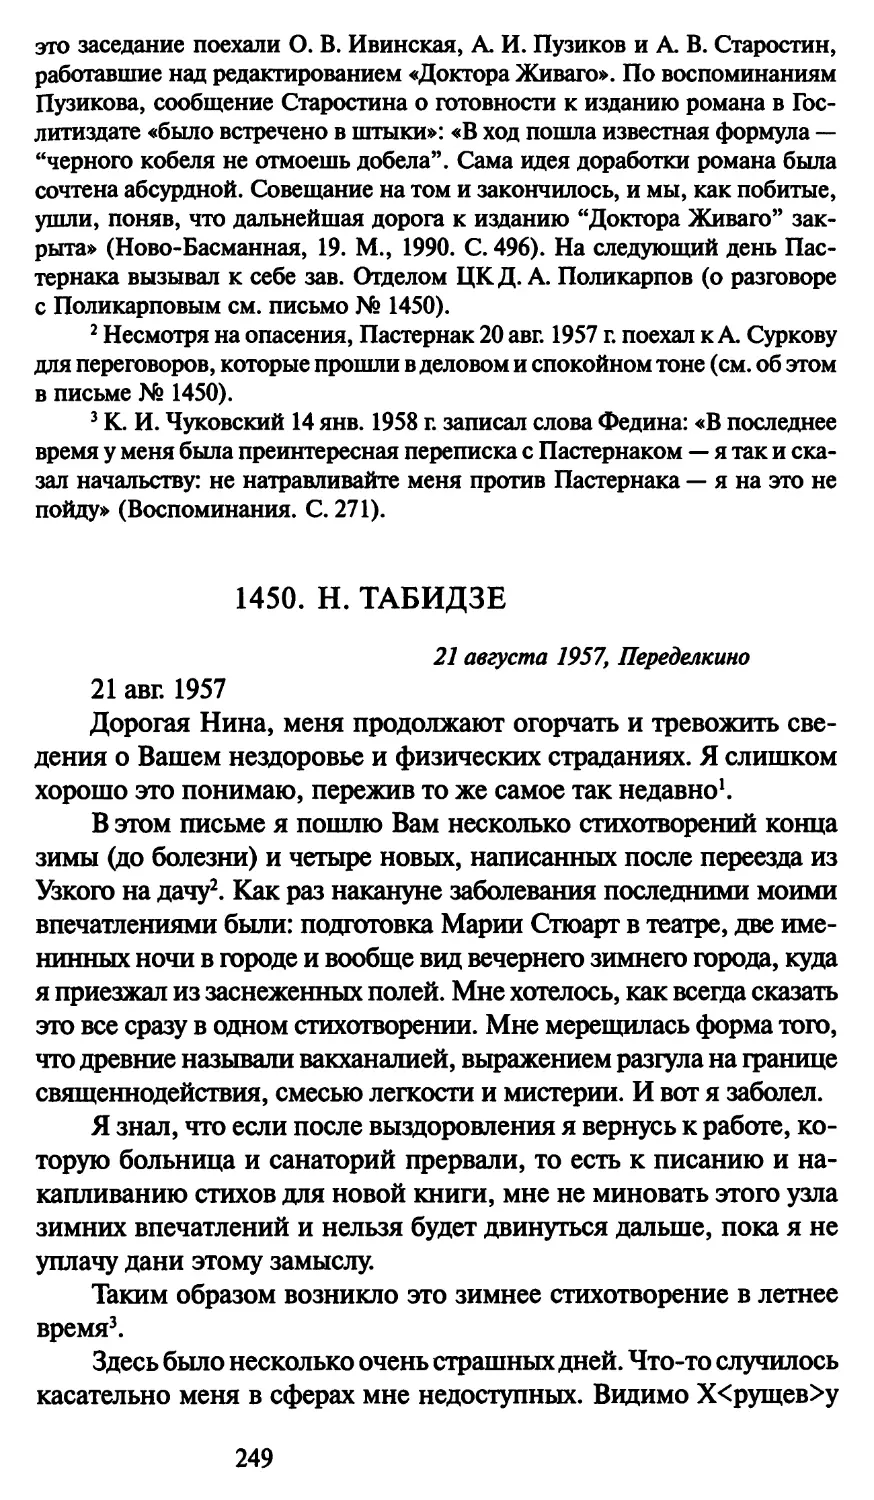 1450. Н. Табидзе 21 августа 1957